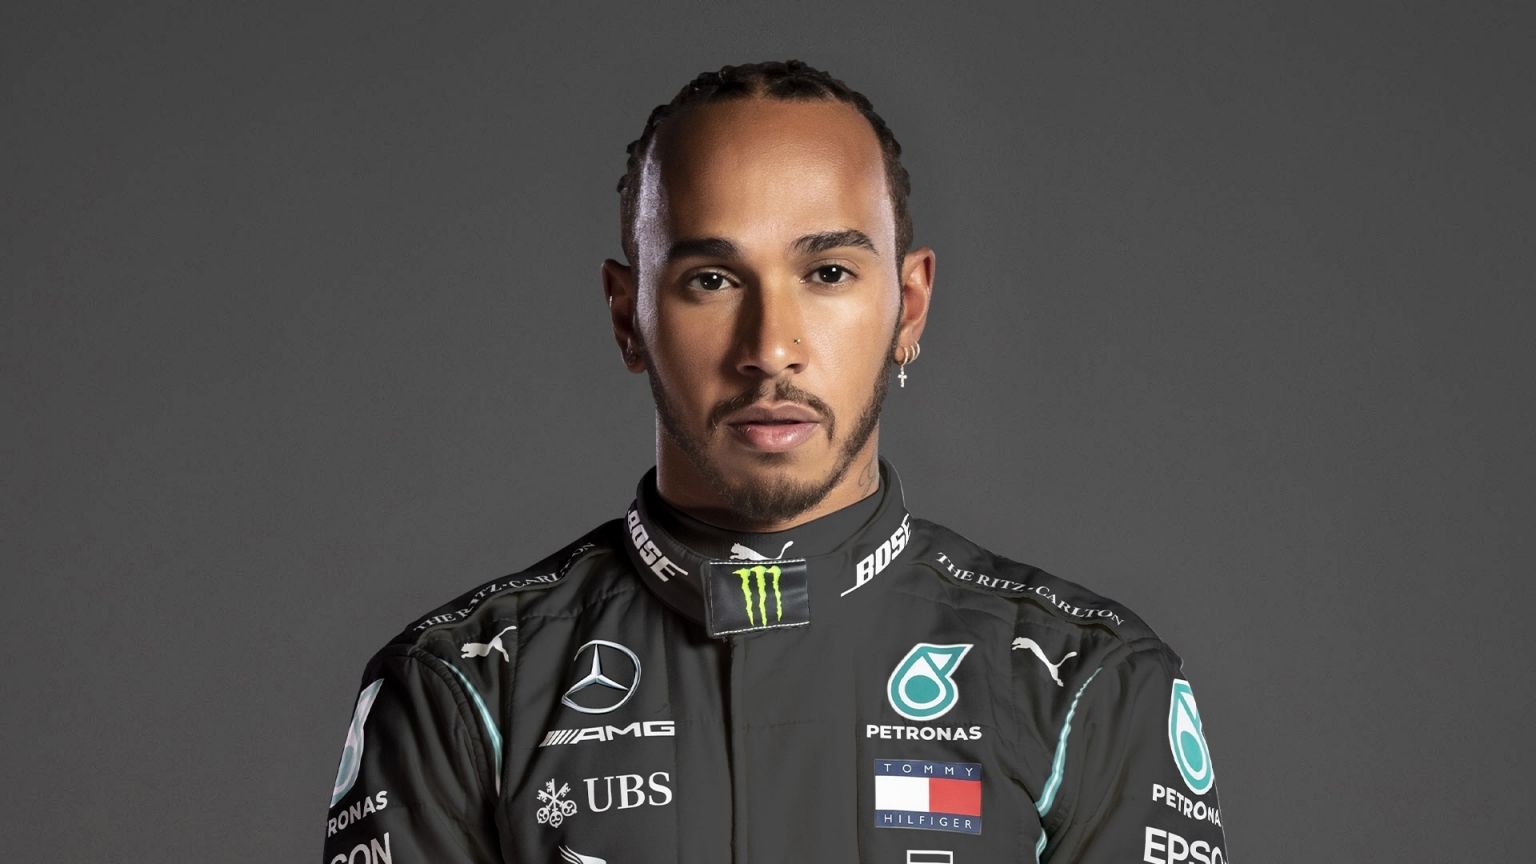 Lewis Hamilton Driver for Mercedes